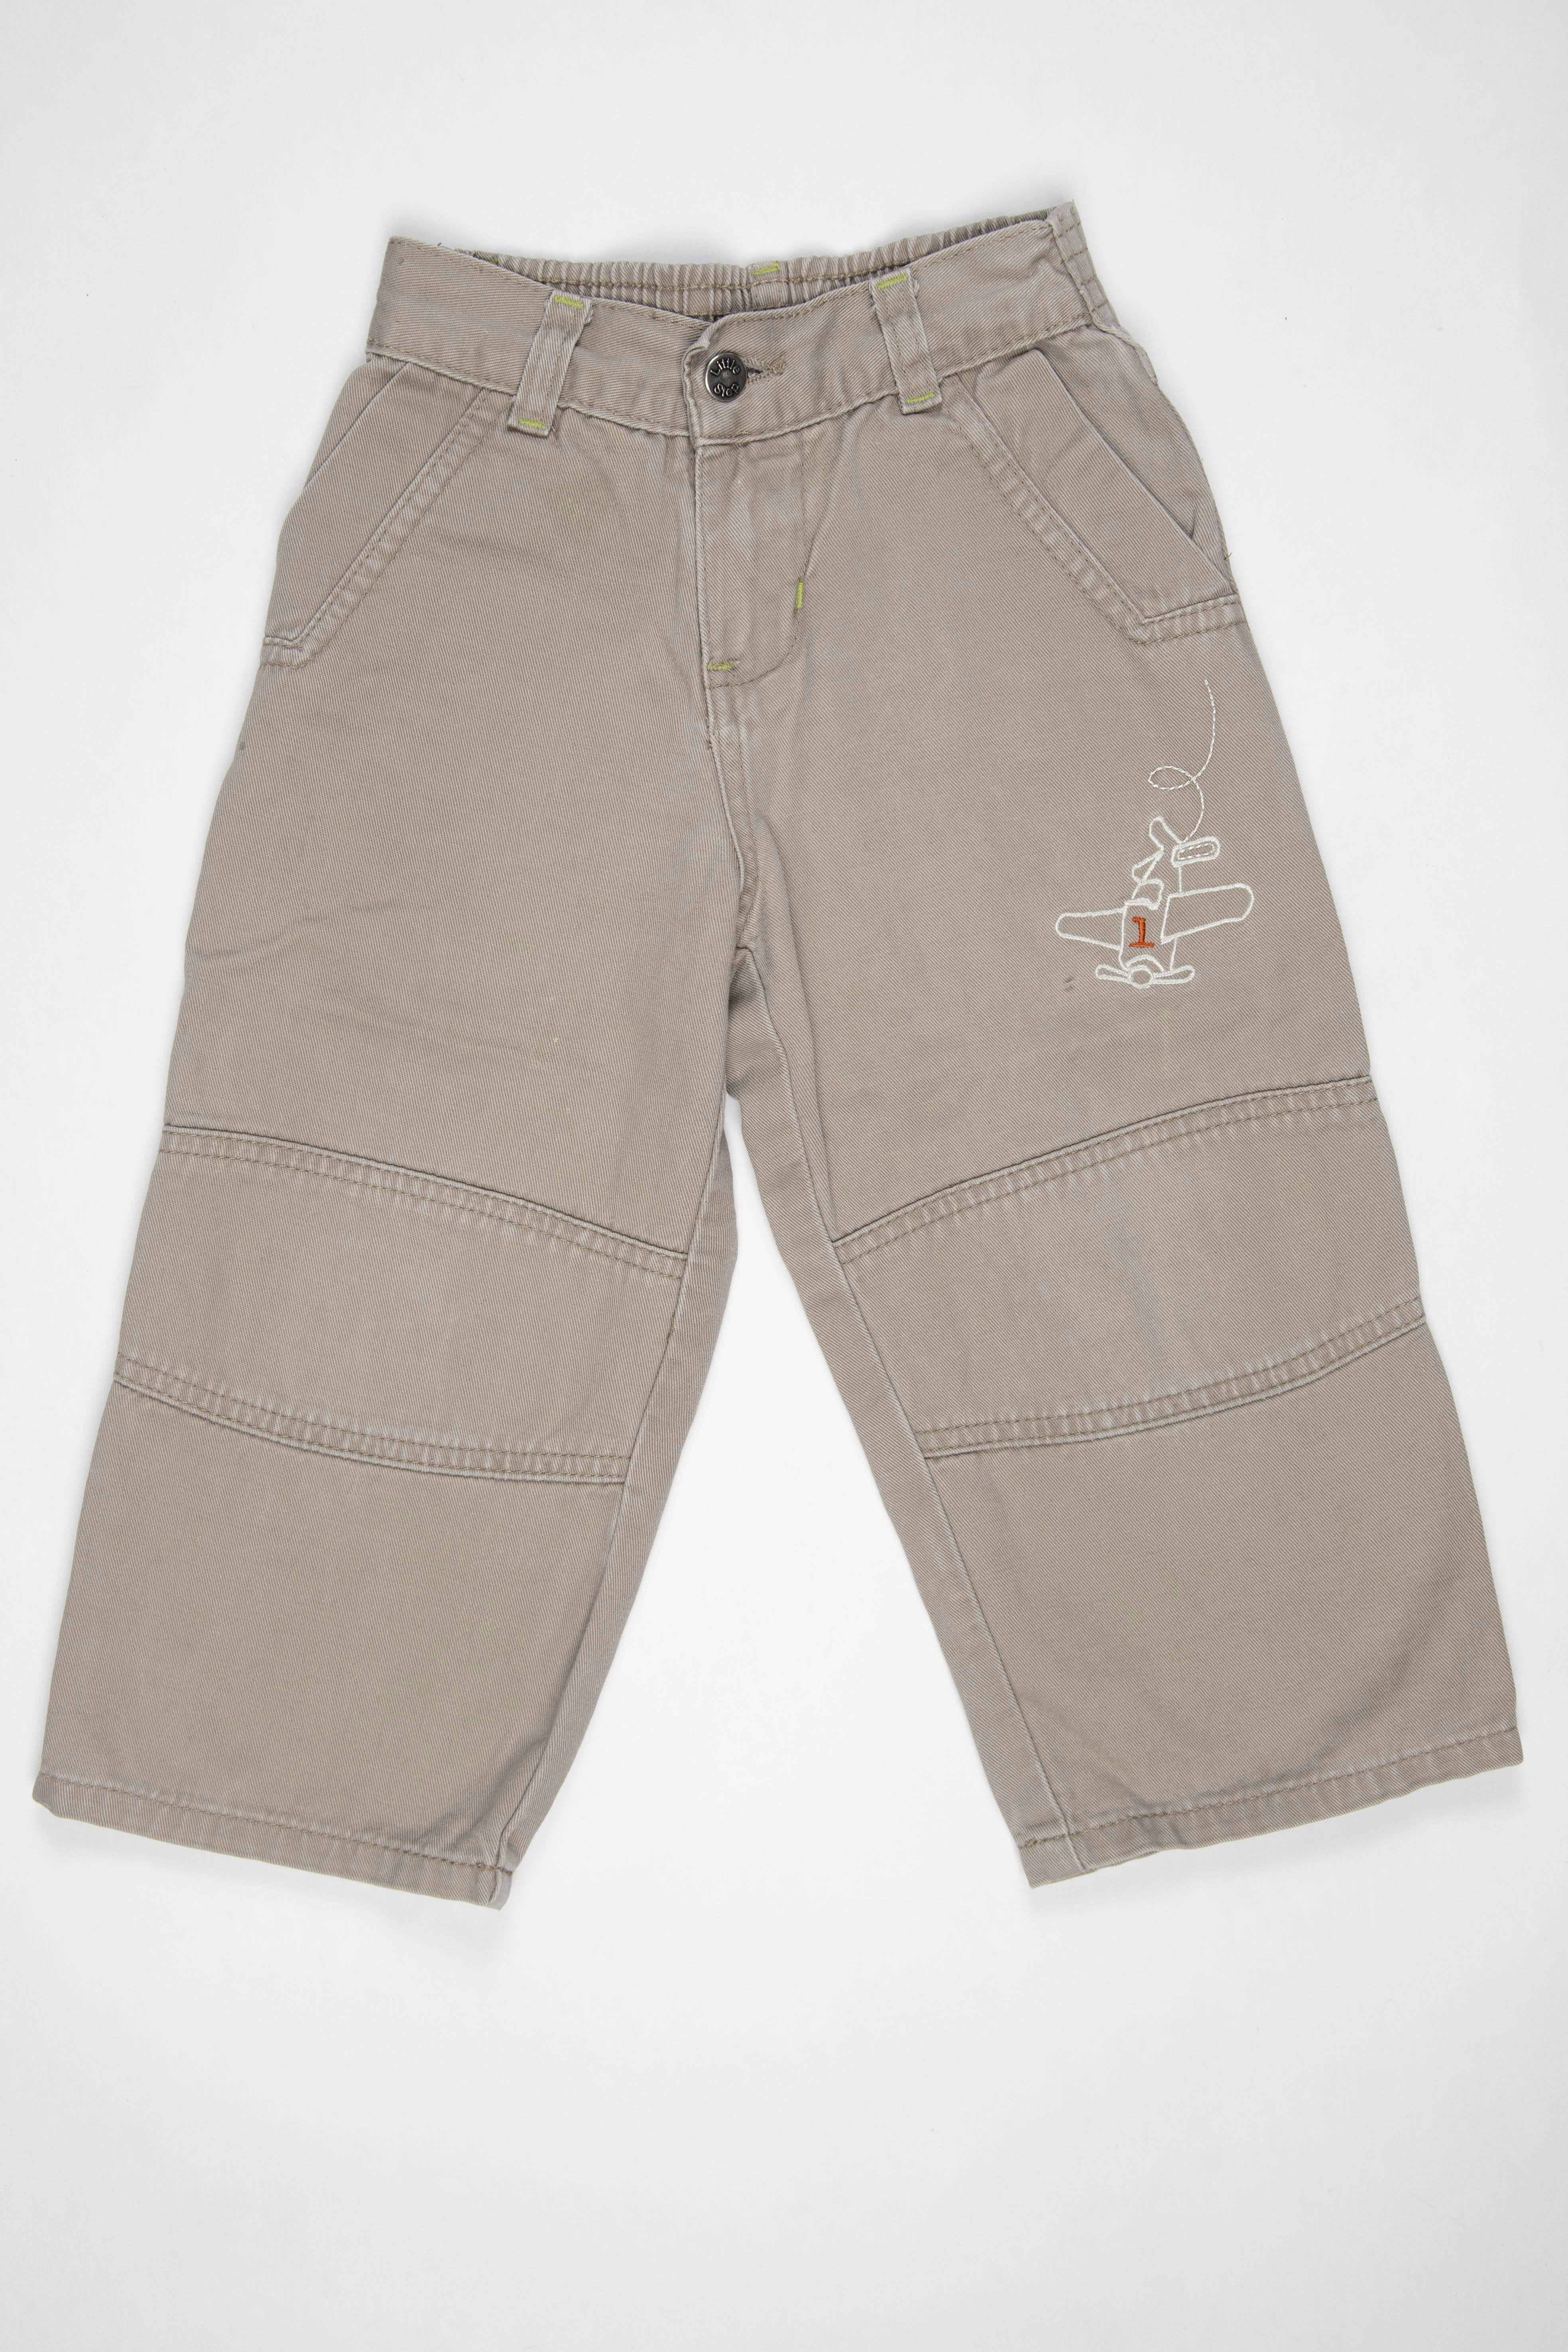 Pantalon drill pierna ancho 100% algodón - Little Step